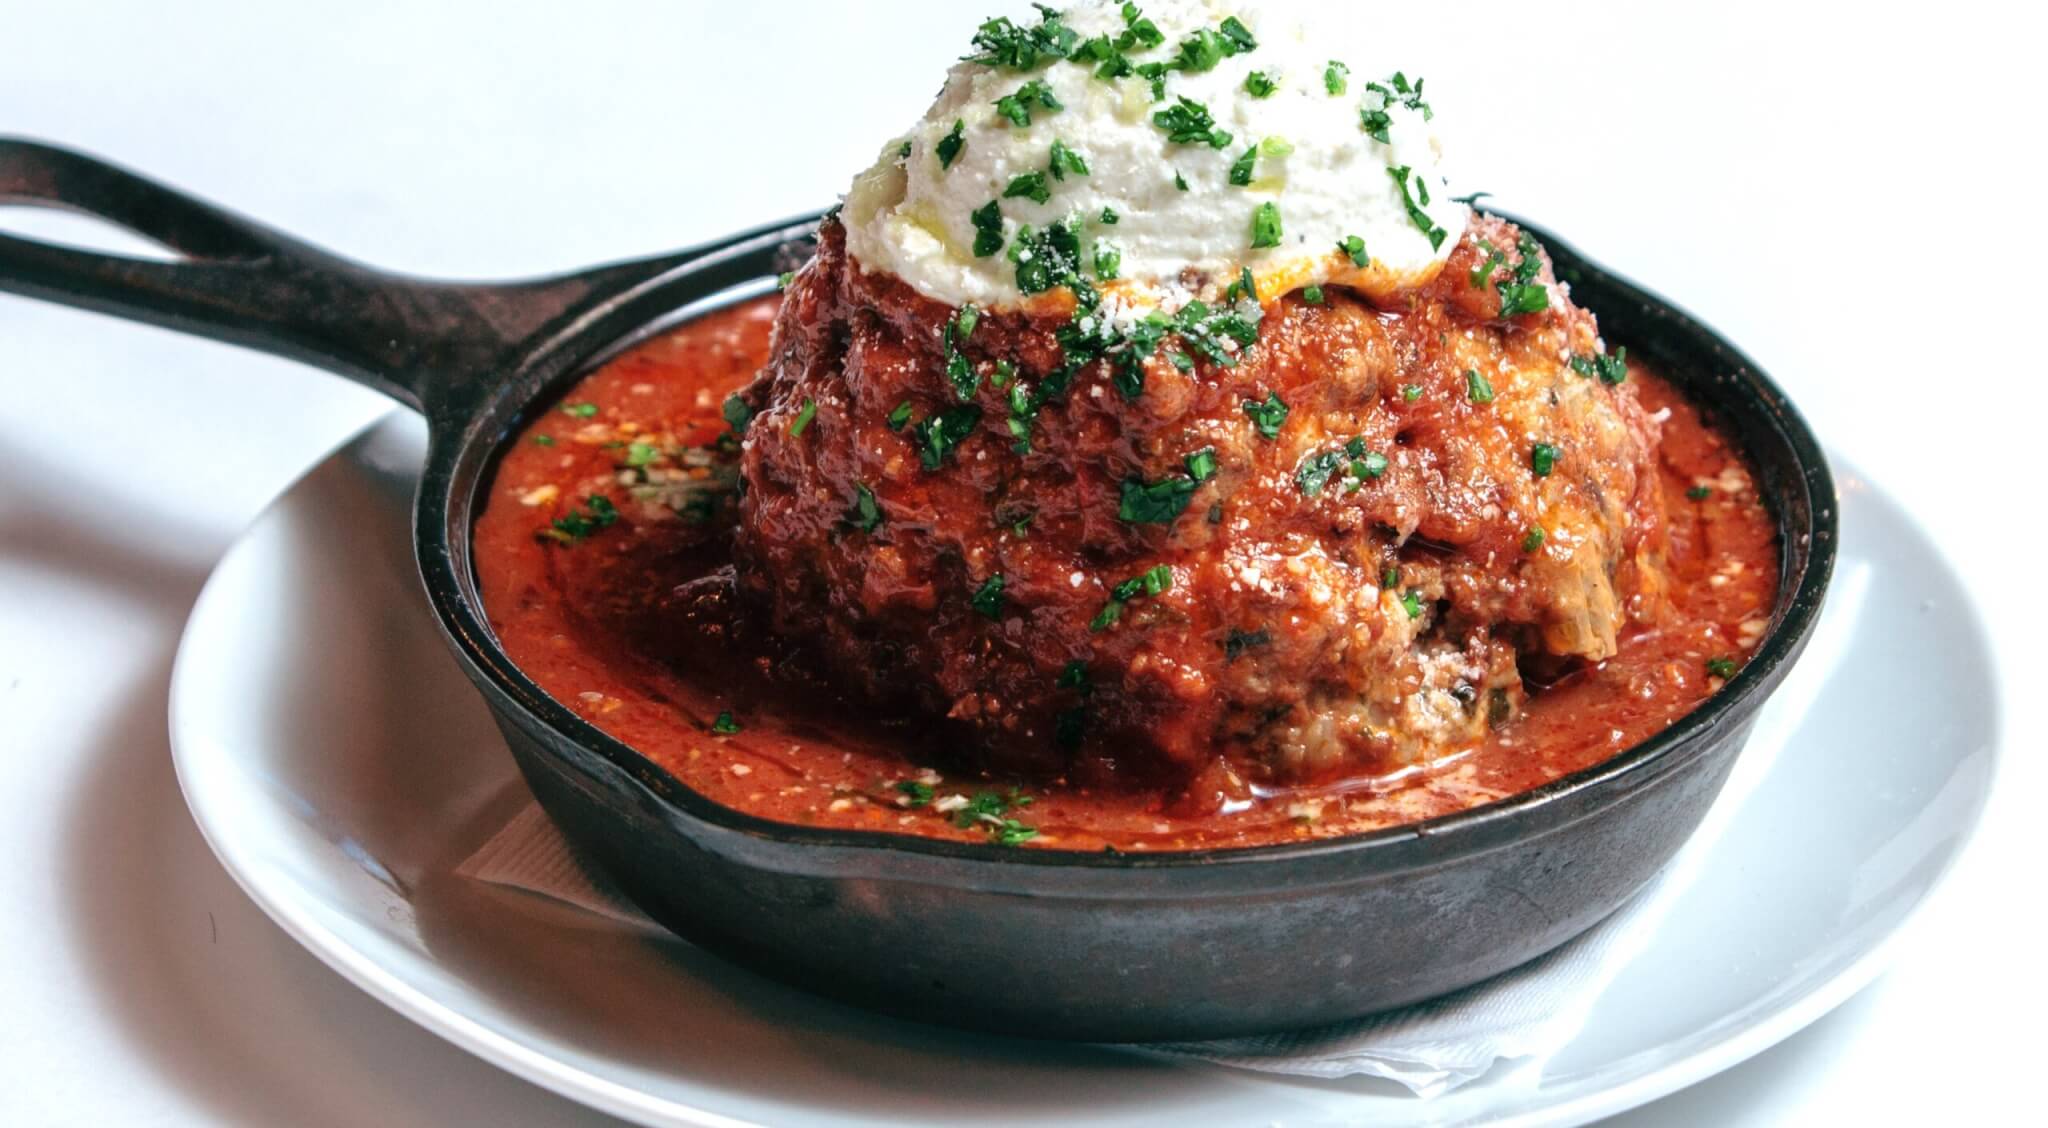 LAVO Italian restaurant Las Vegas - The Meatball